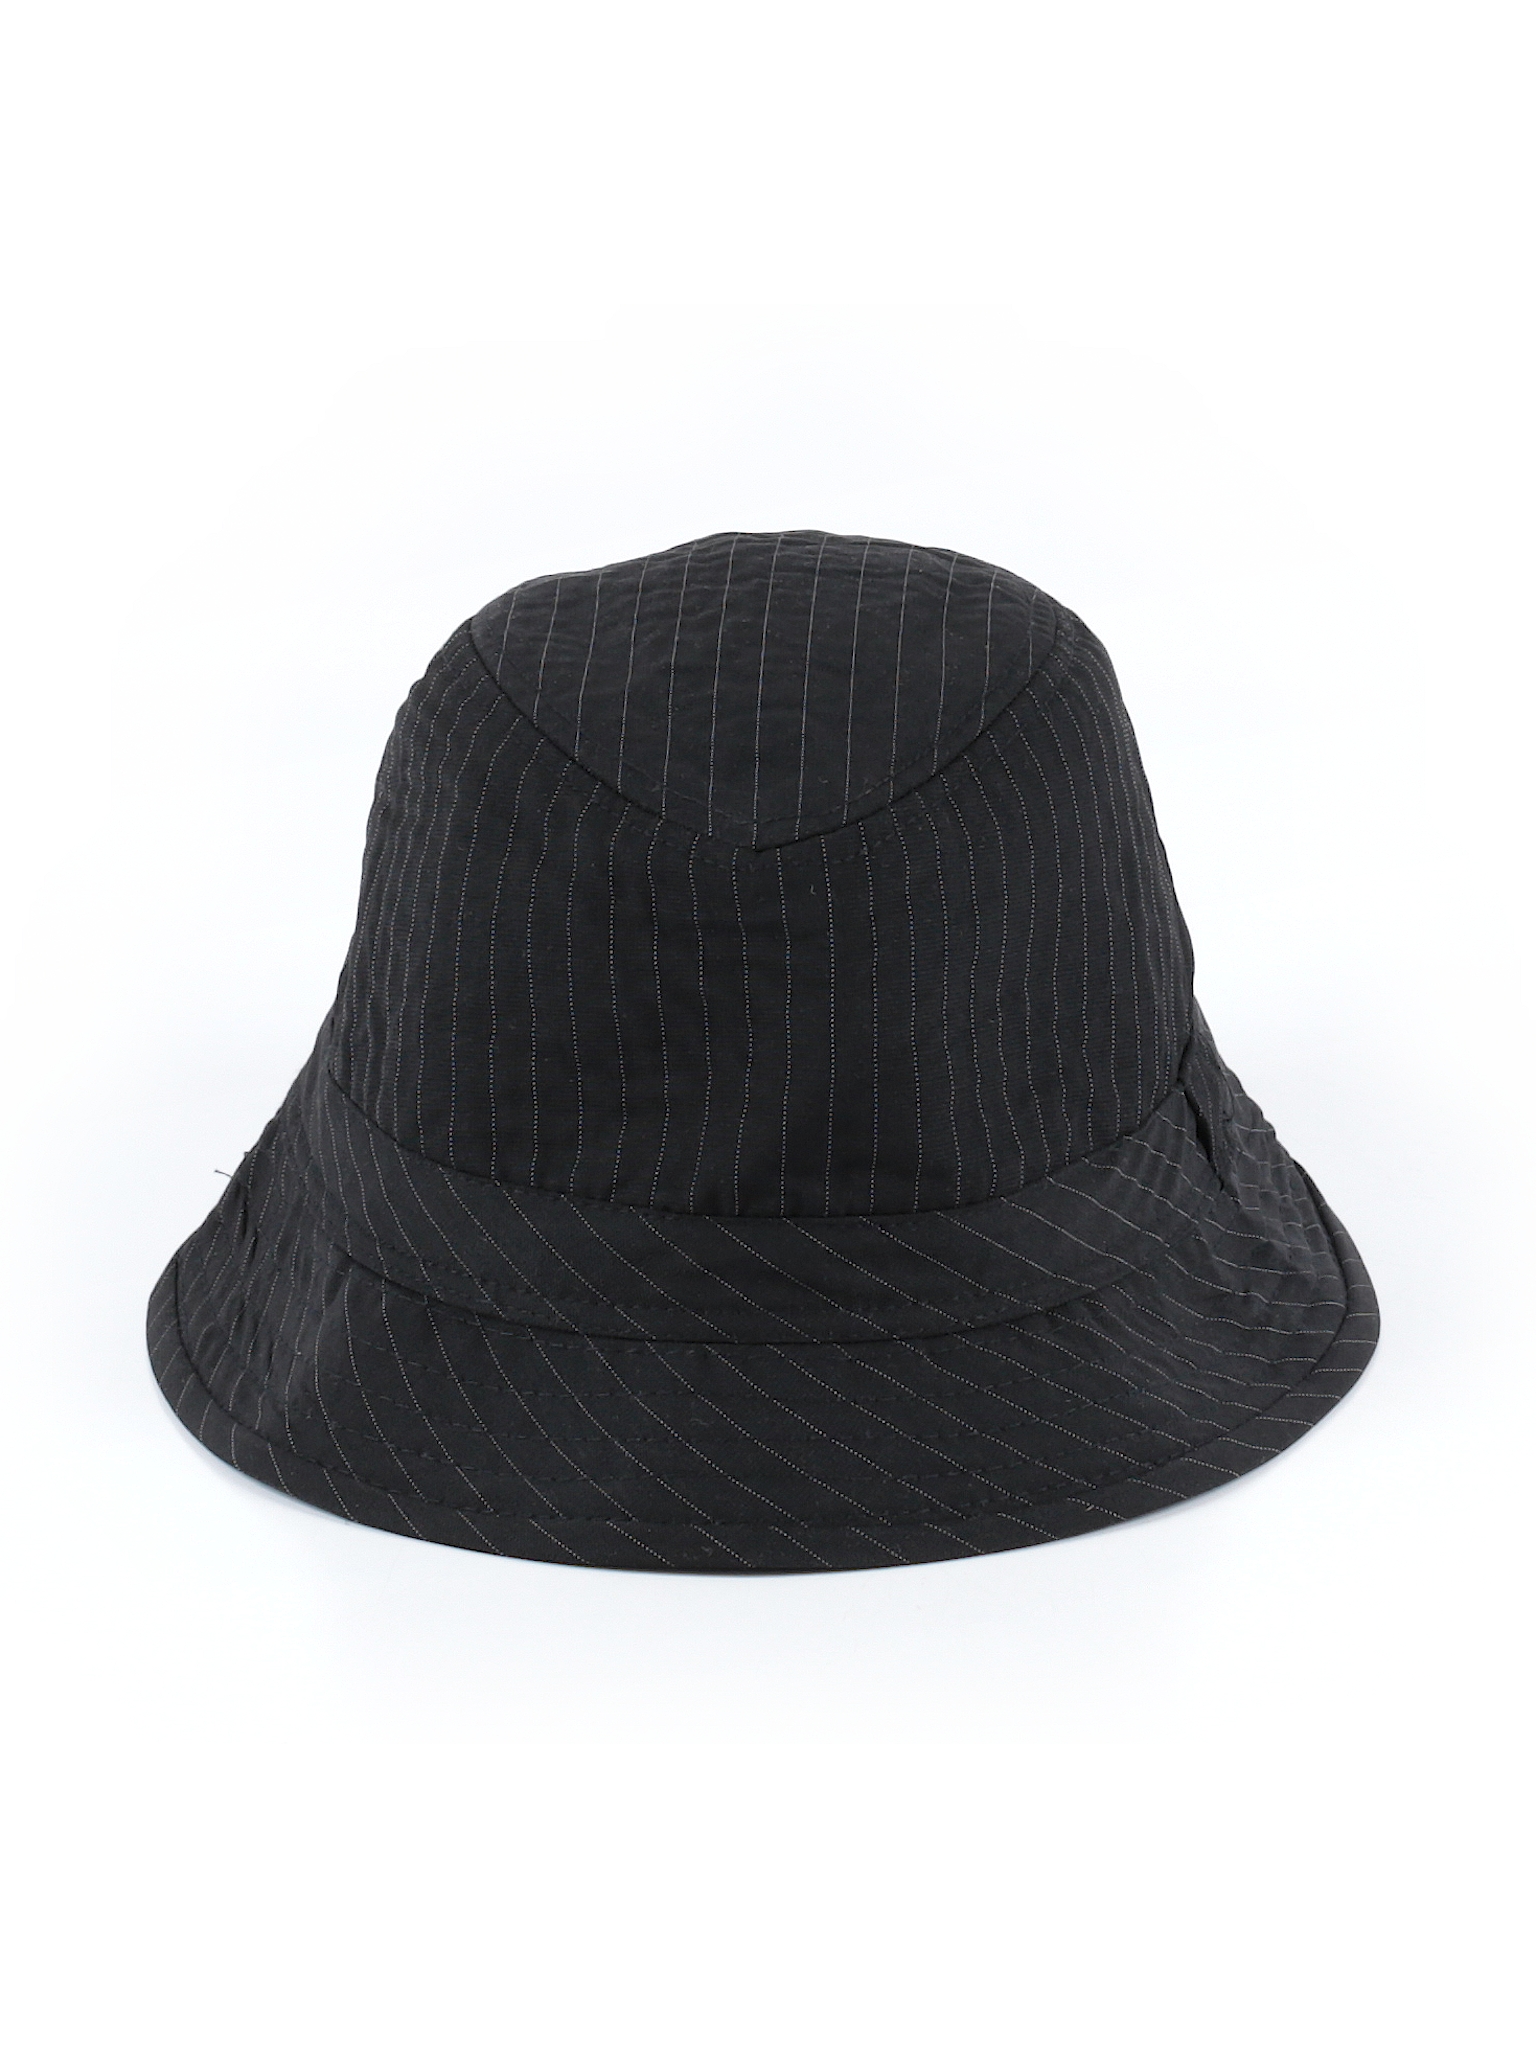 Bio-Domes Headgear 100% Polyester Stripes Black Hat Size Lg - XL - 40% ...